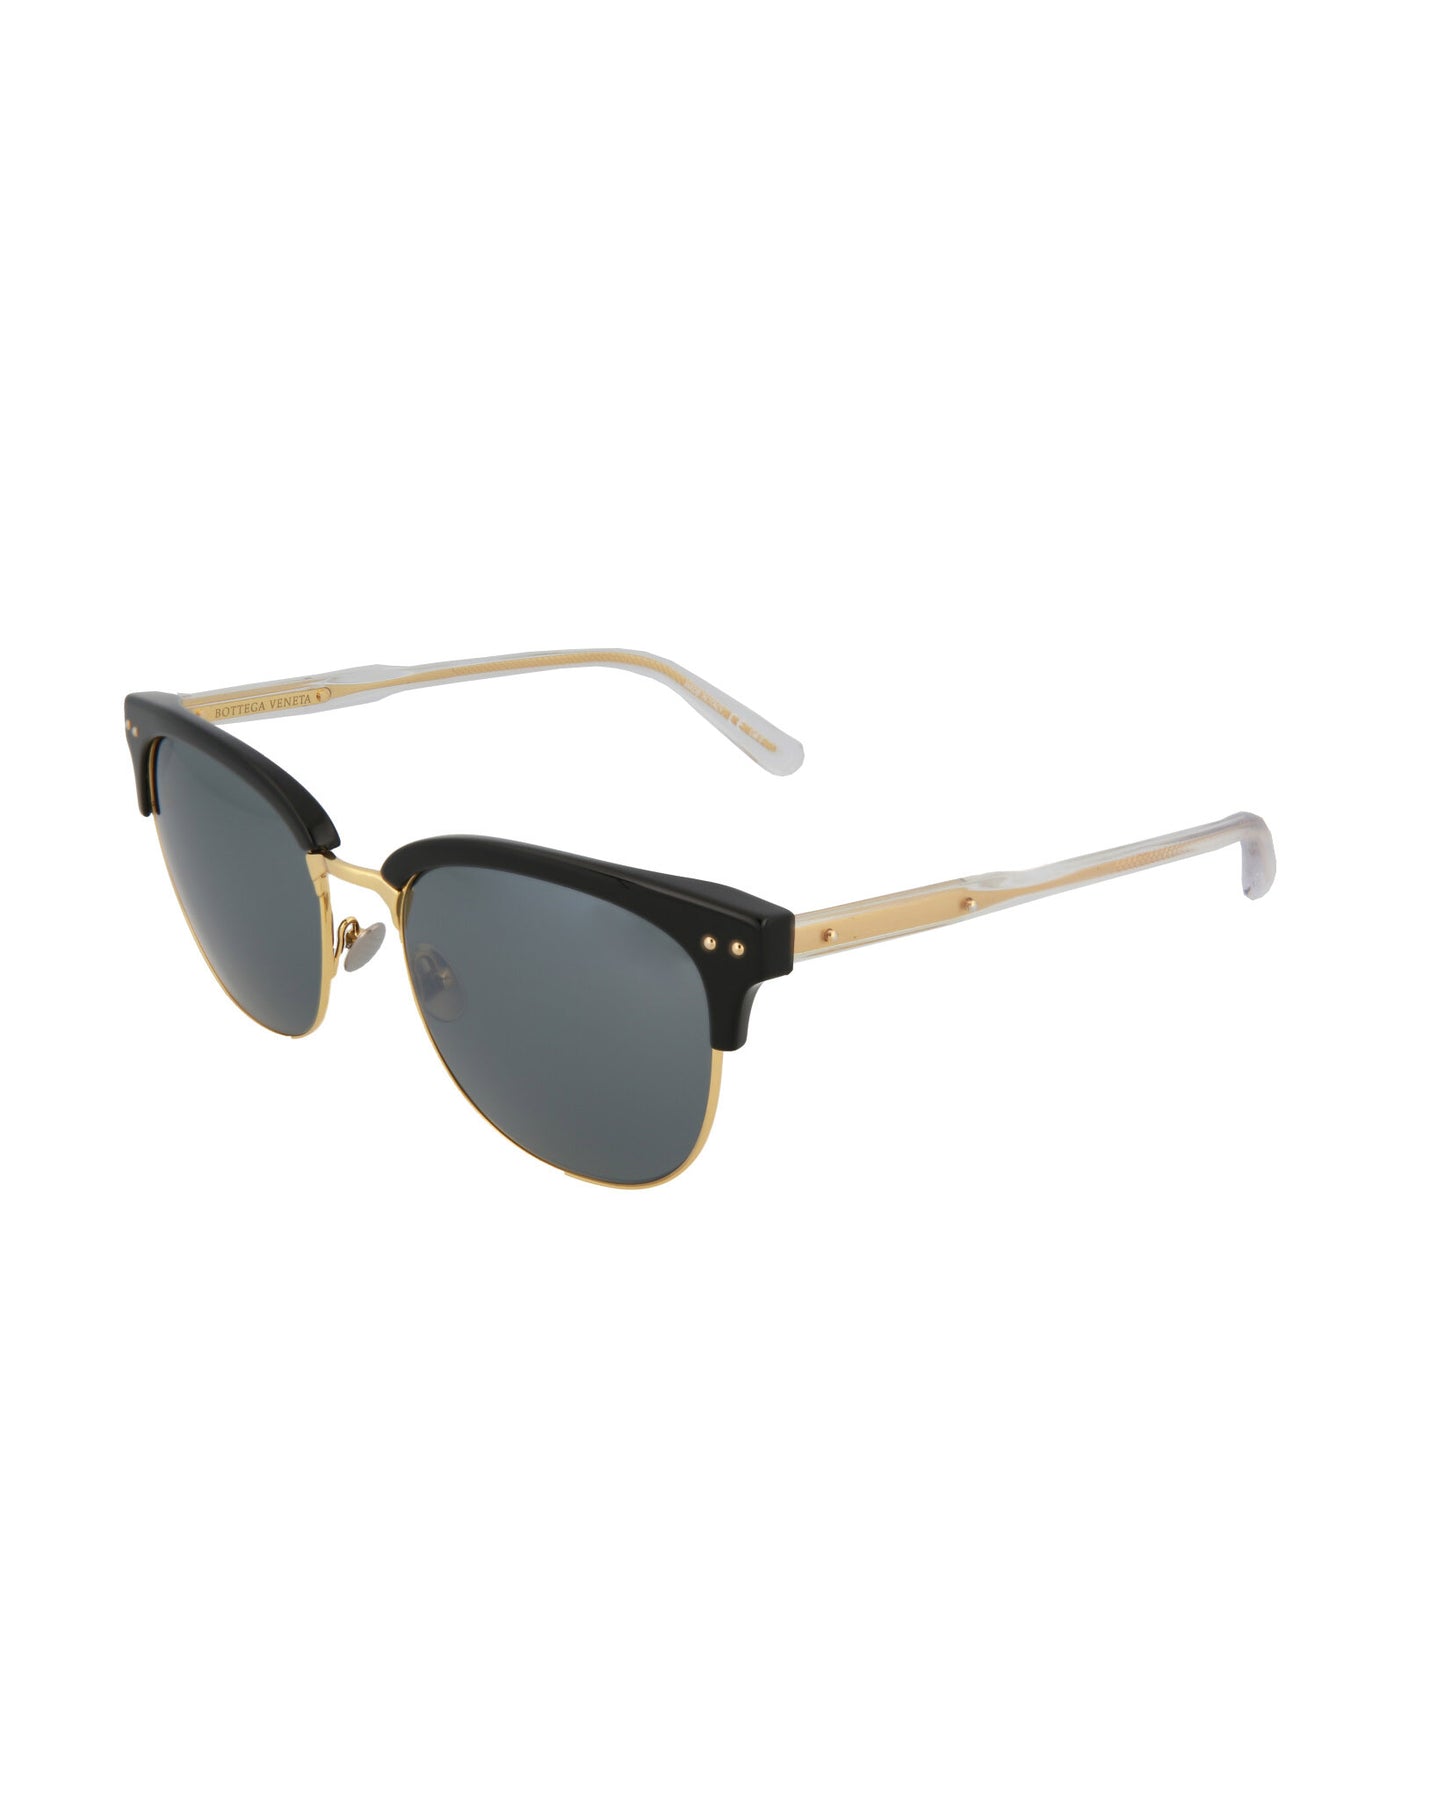 Bottega Veneta Fashion Sunglasses Shiny Black Shiny Gold